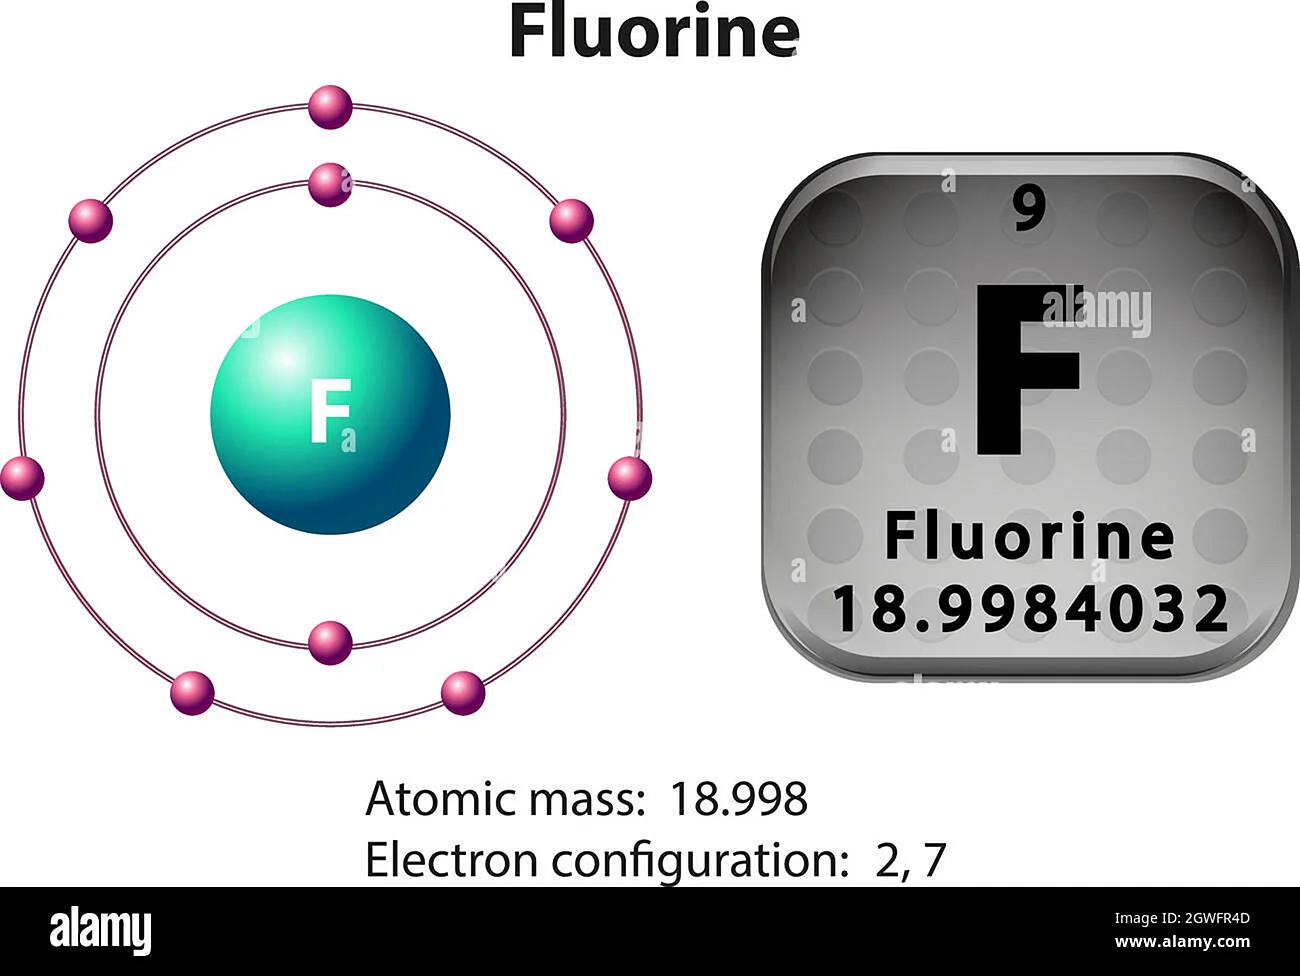 Fluorine Electron configuration